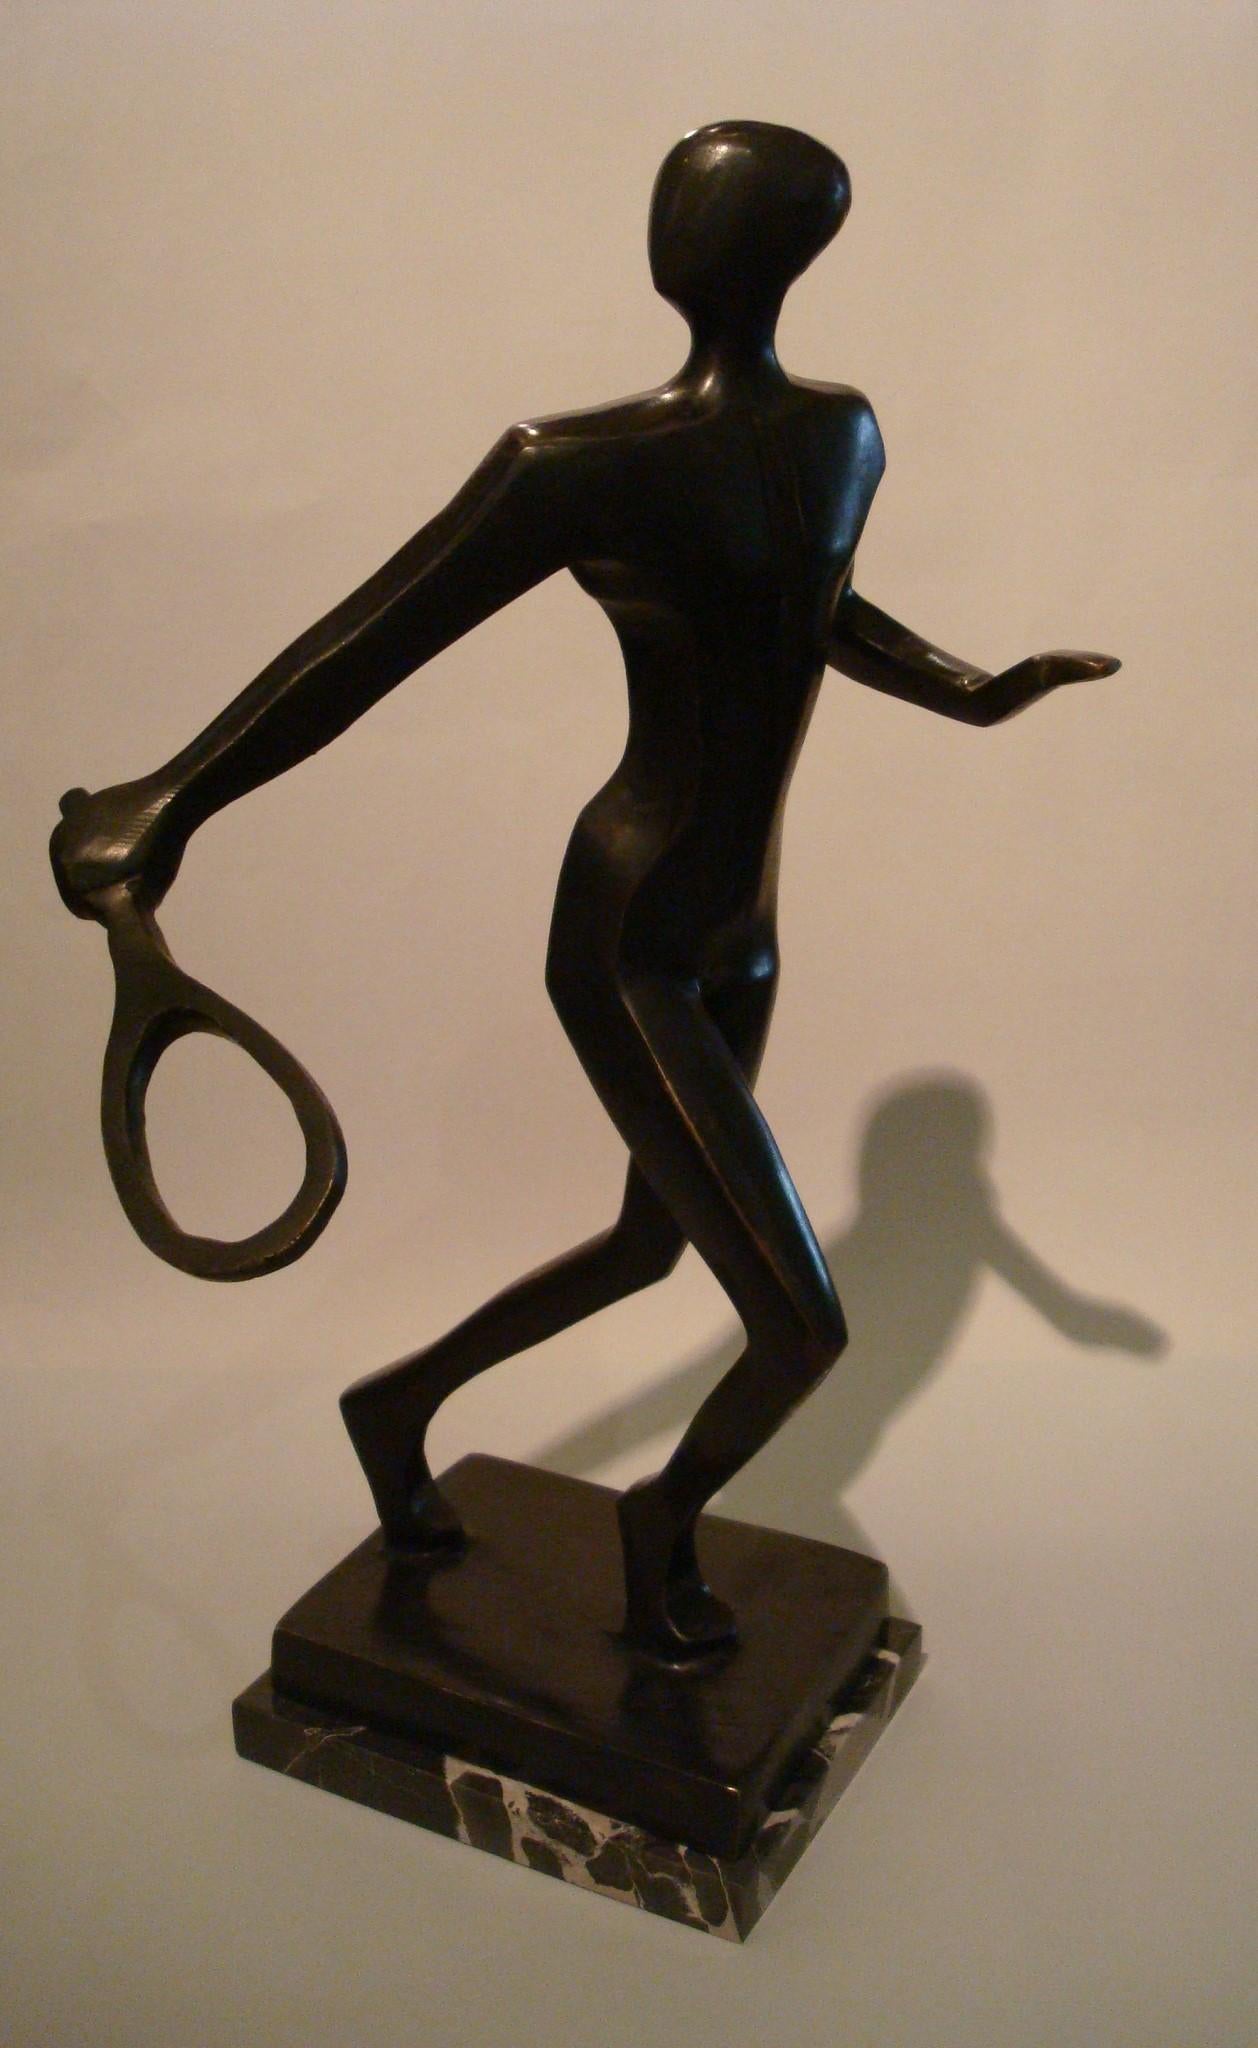 Midcentury tennis player bronze sculpture / Trophy. Italy, 1930s.
Very nice Italian bronze figure. Mounted over black Portoro marble.